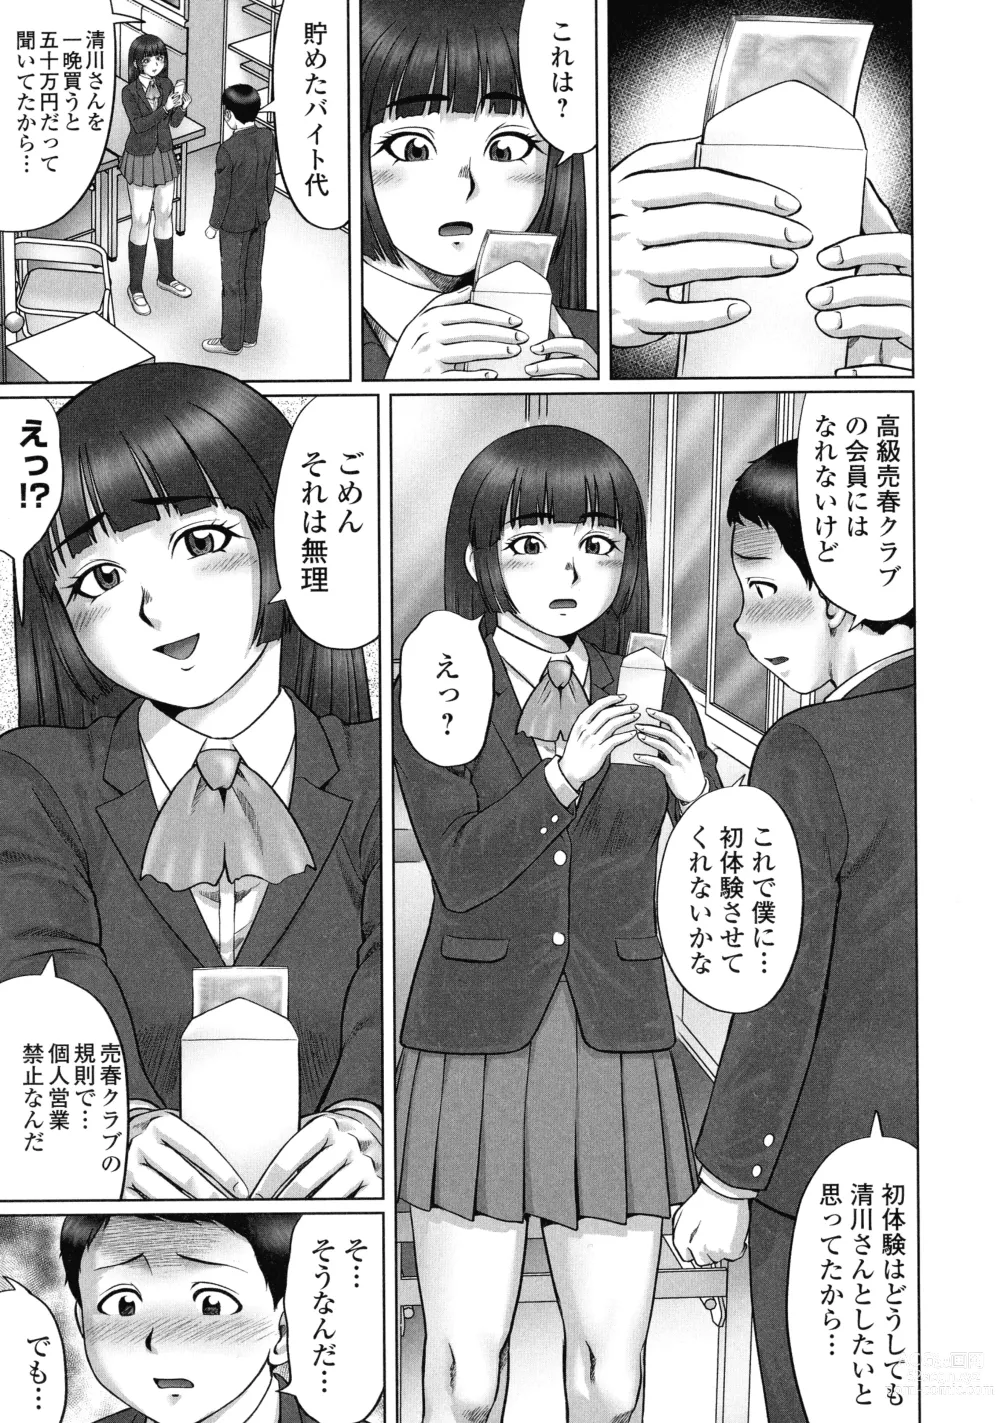 Page 14 of manga Doutei Z Sedai - Doutei Z Generation